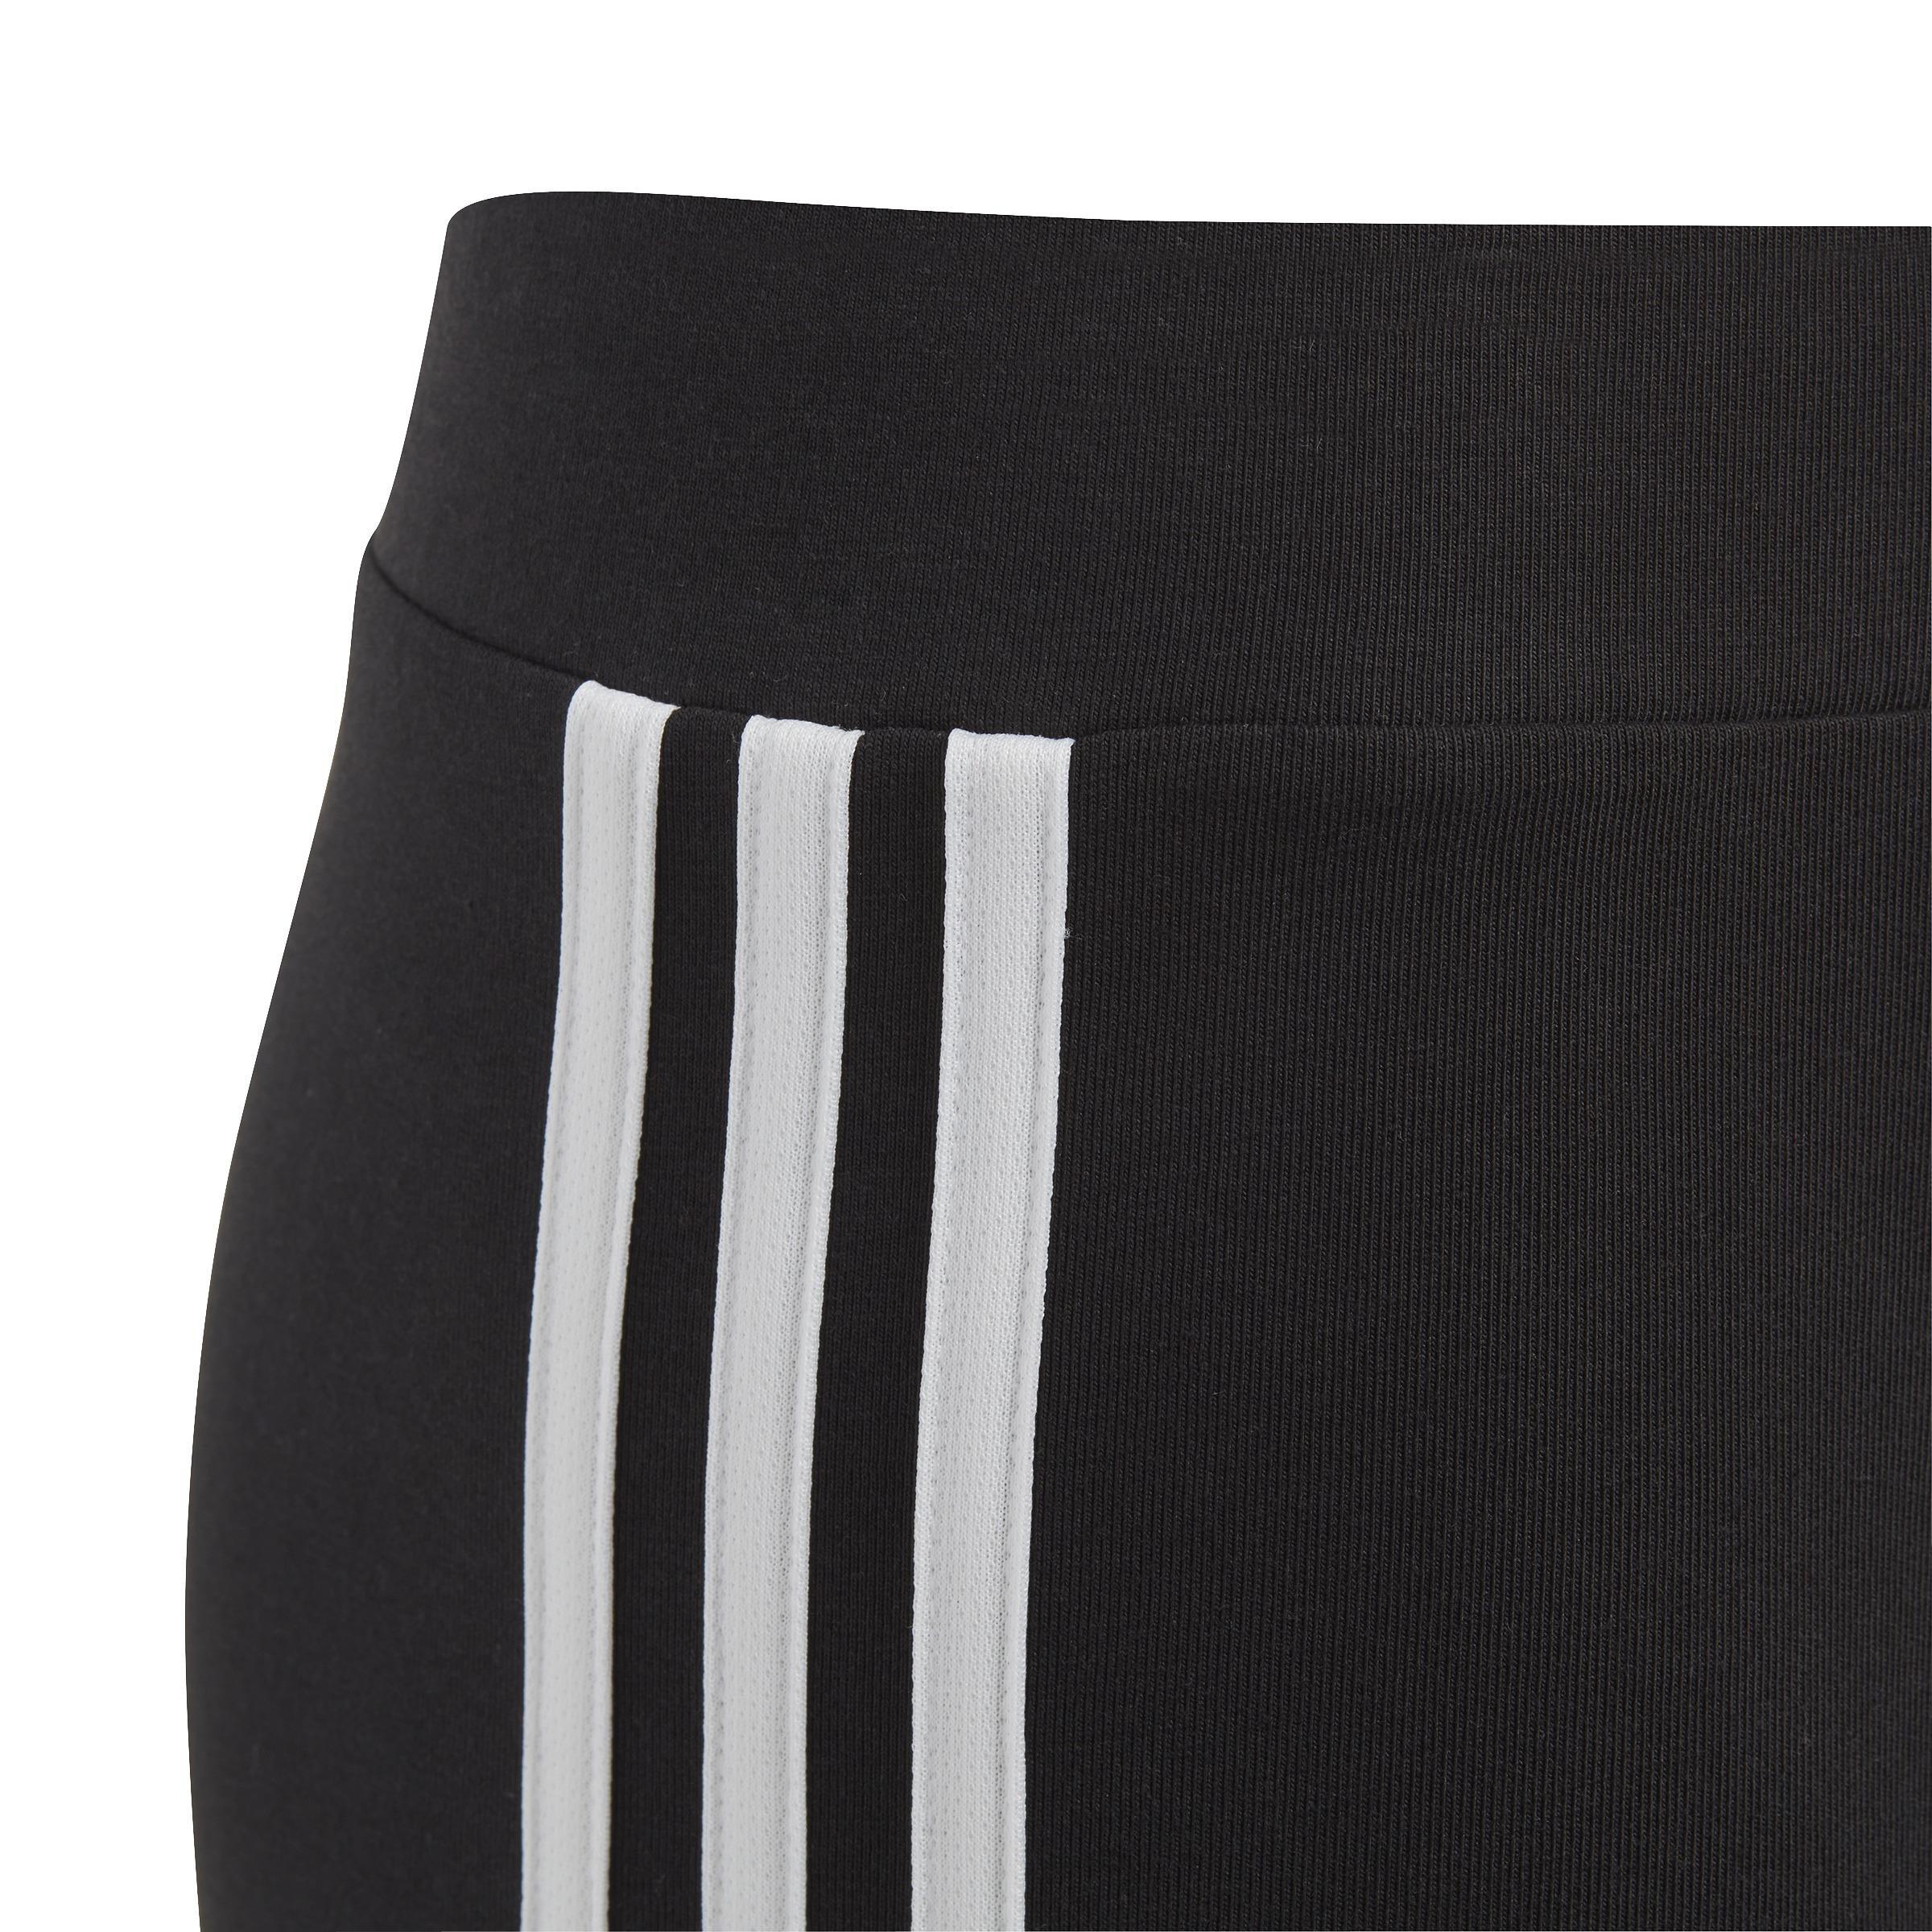 adidas - Kids Girls Essentials 3-Stripes Cotton Leggings, Black